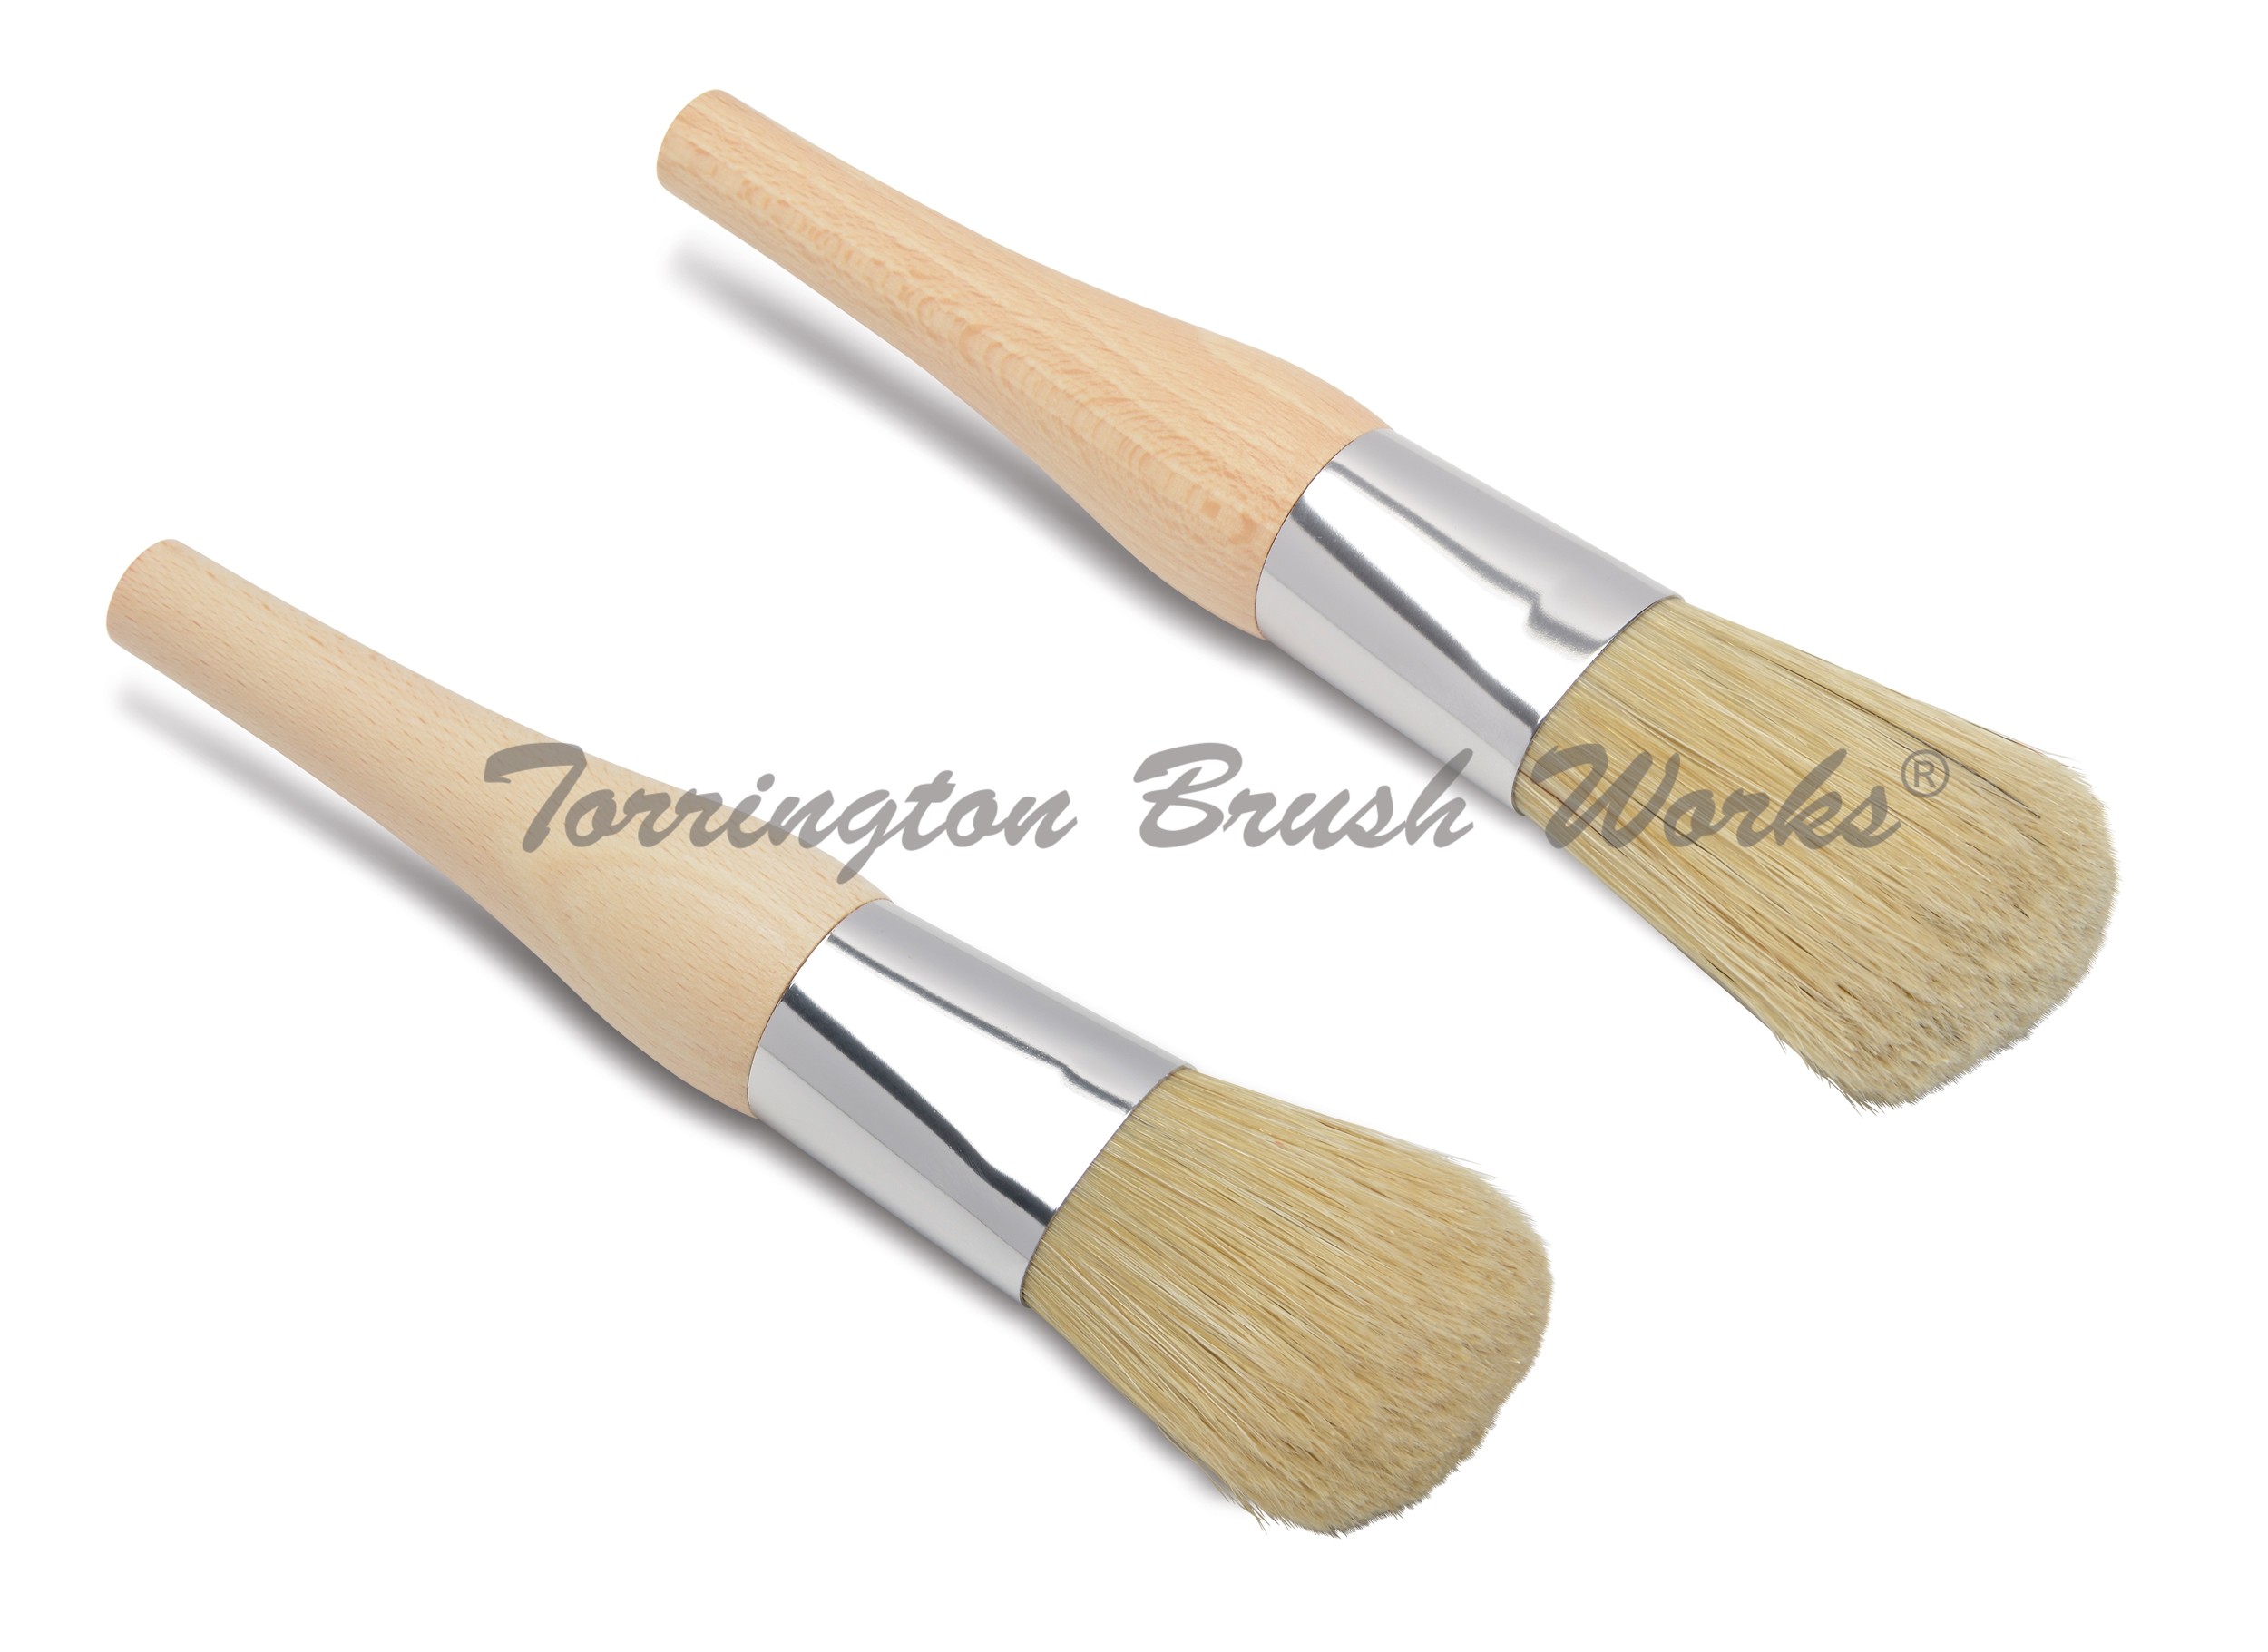 Kiefer Paint Brush 1.75" wide Oval Head Wood Handle w/ Soft Bristles Lot of 2 